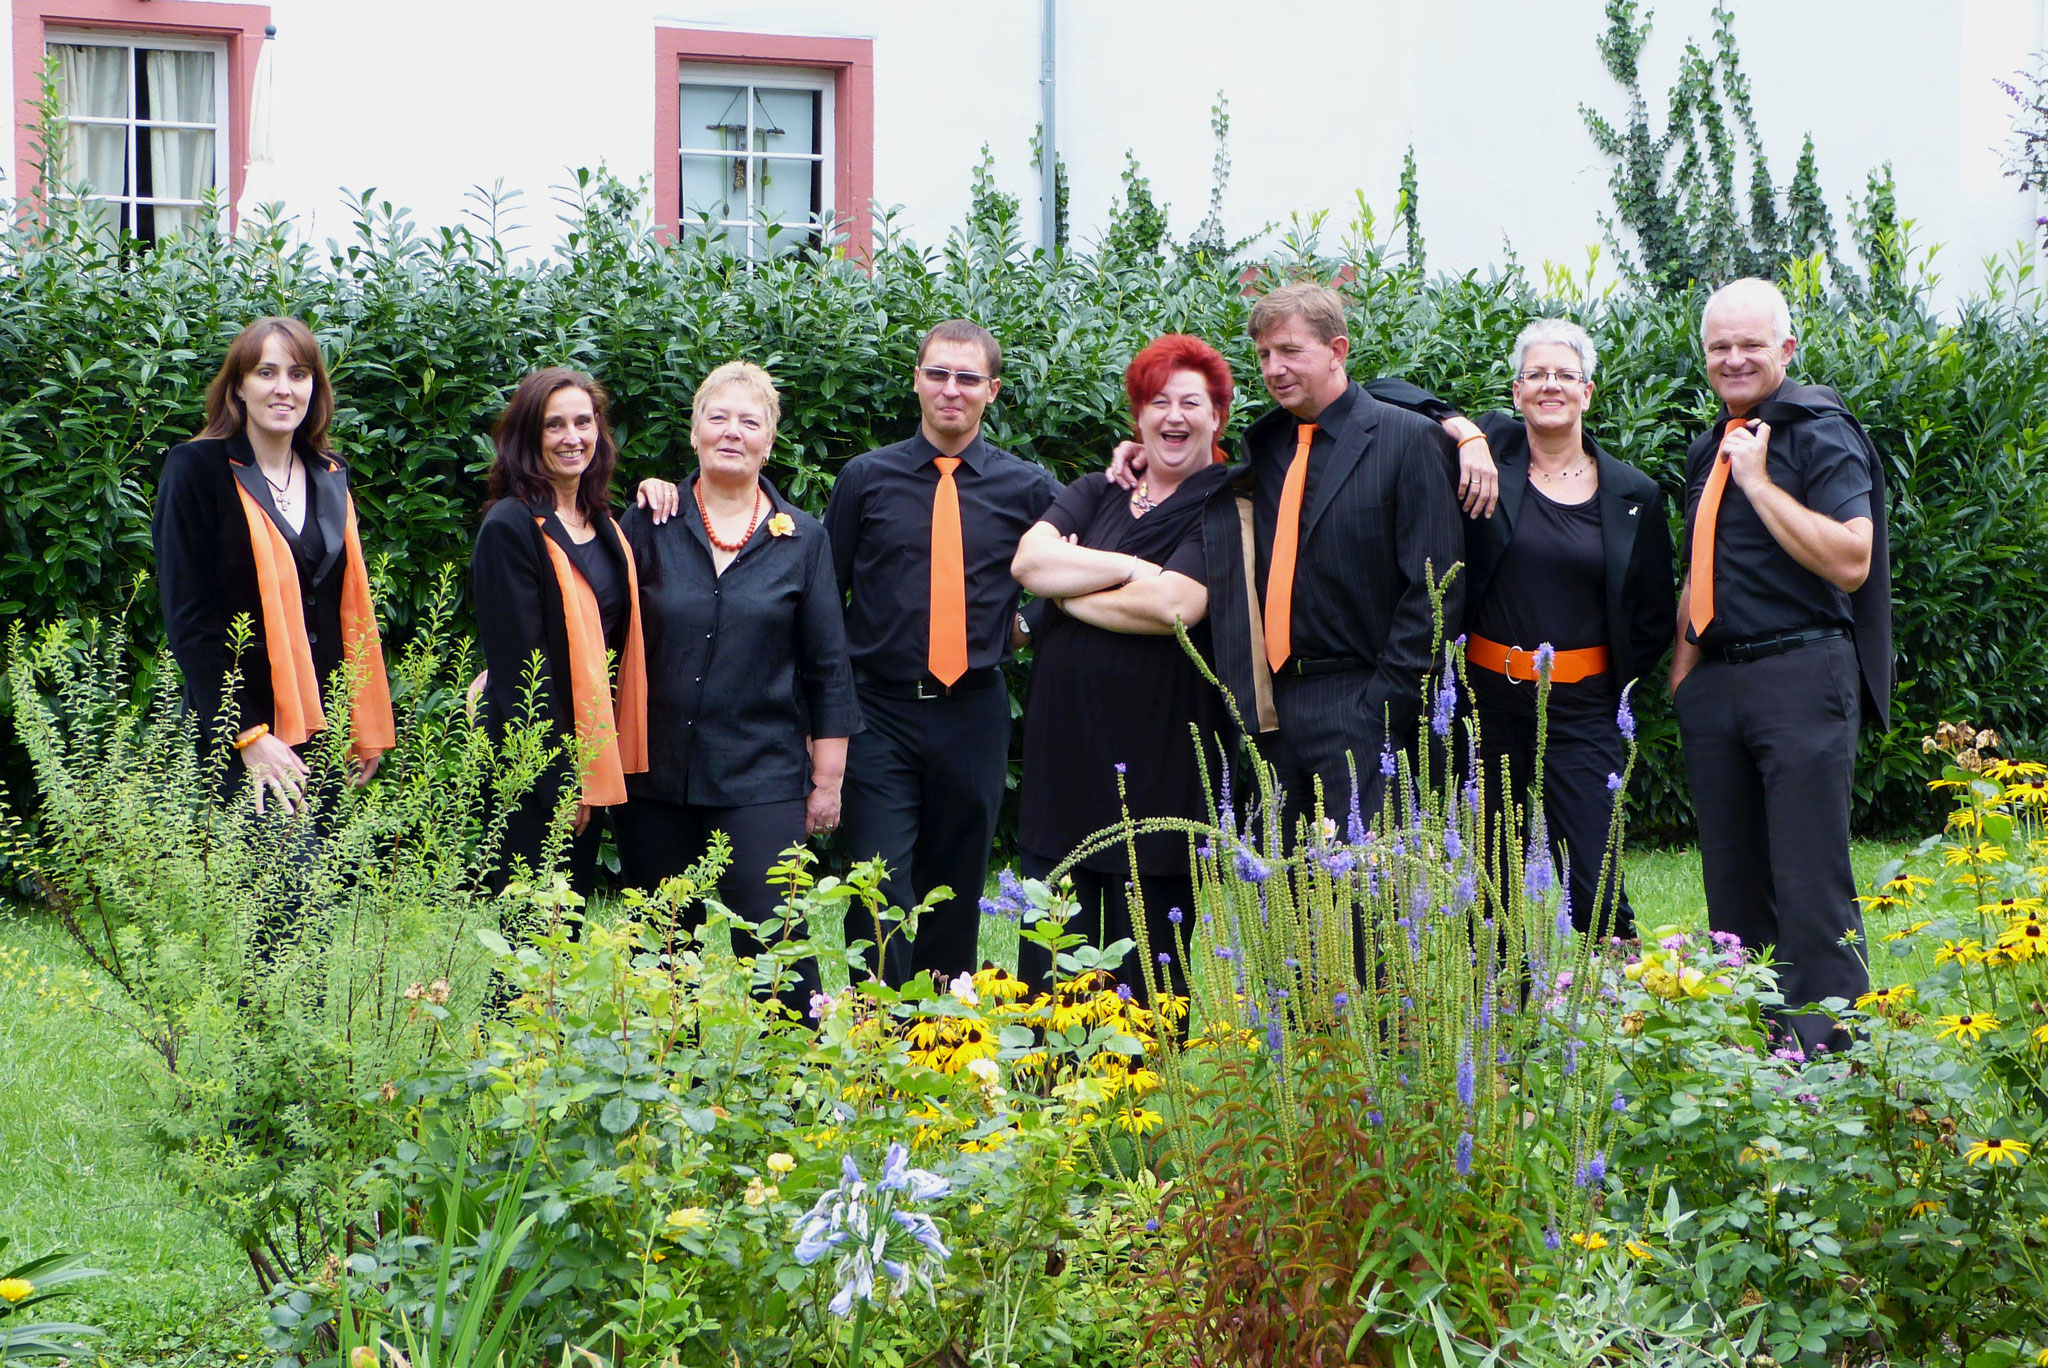 2014: Lahnstein, Martinsschloss, vor der Serenade mit dem Männerchor "Frohsinn". Fotos: Rainer Lindner